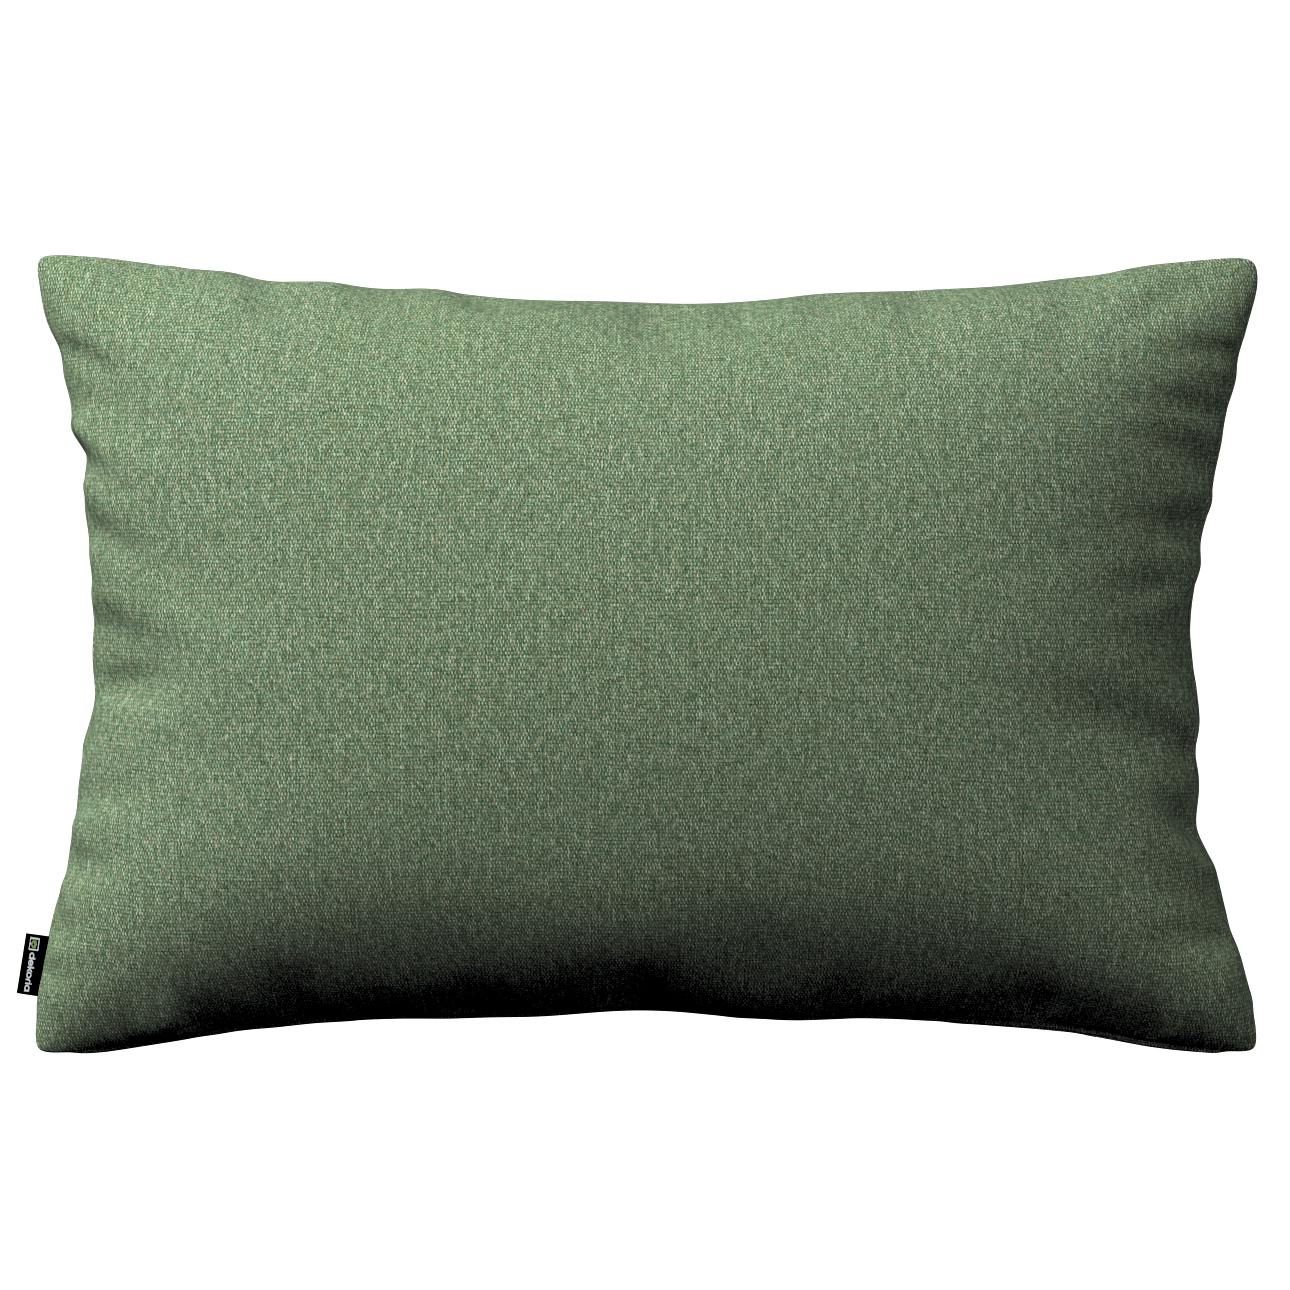 Kissenhülle Kinga rechteckig, grün, 60 x 40 cm, Amsterdam (704-44) günstig online kaufen